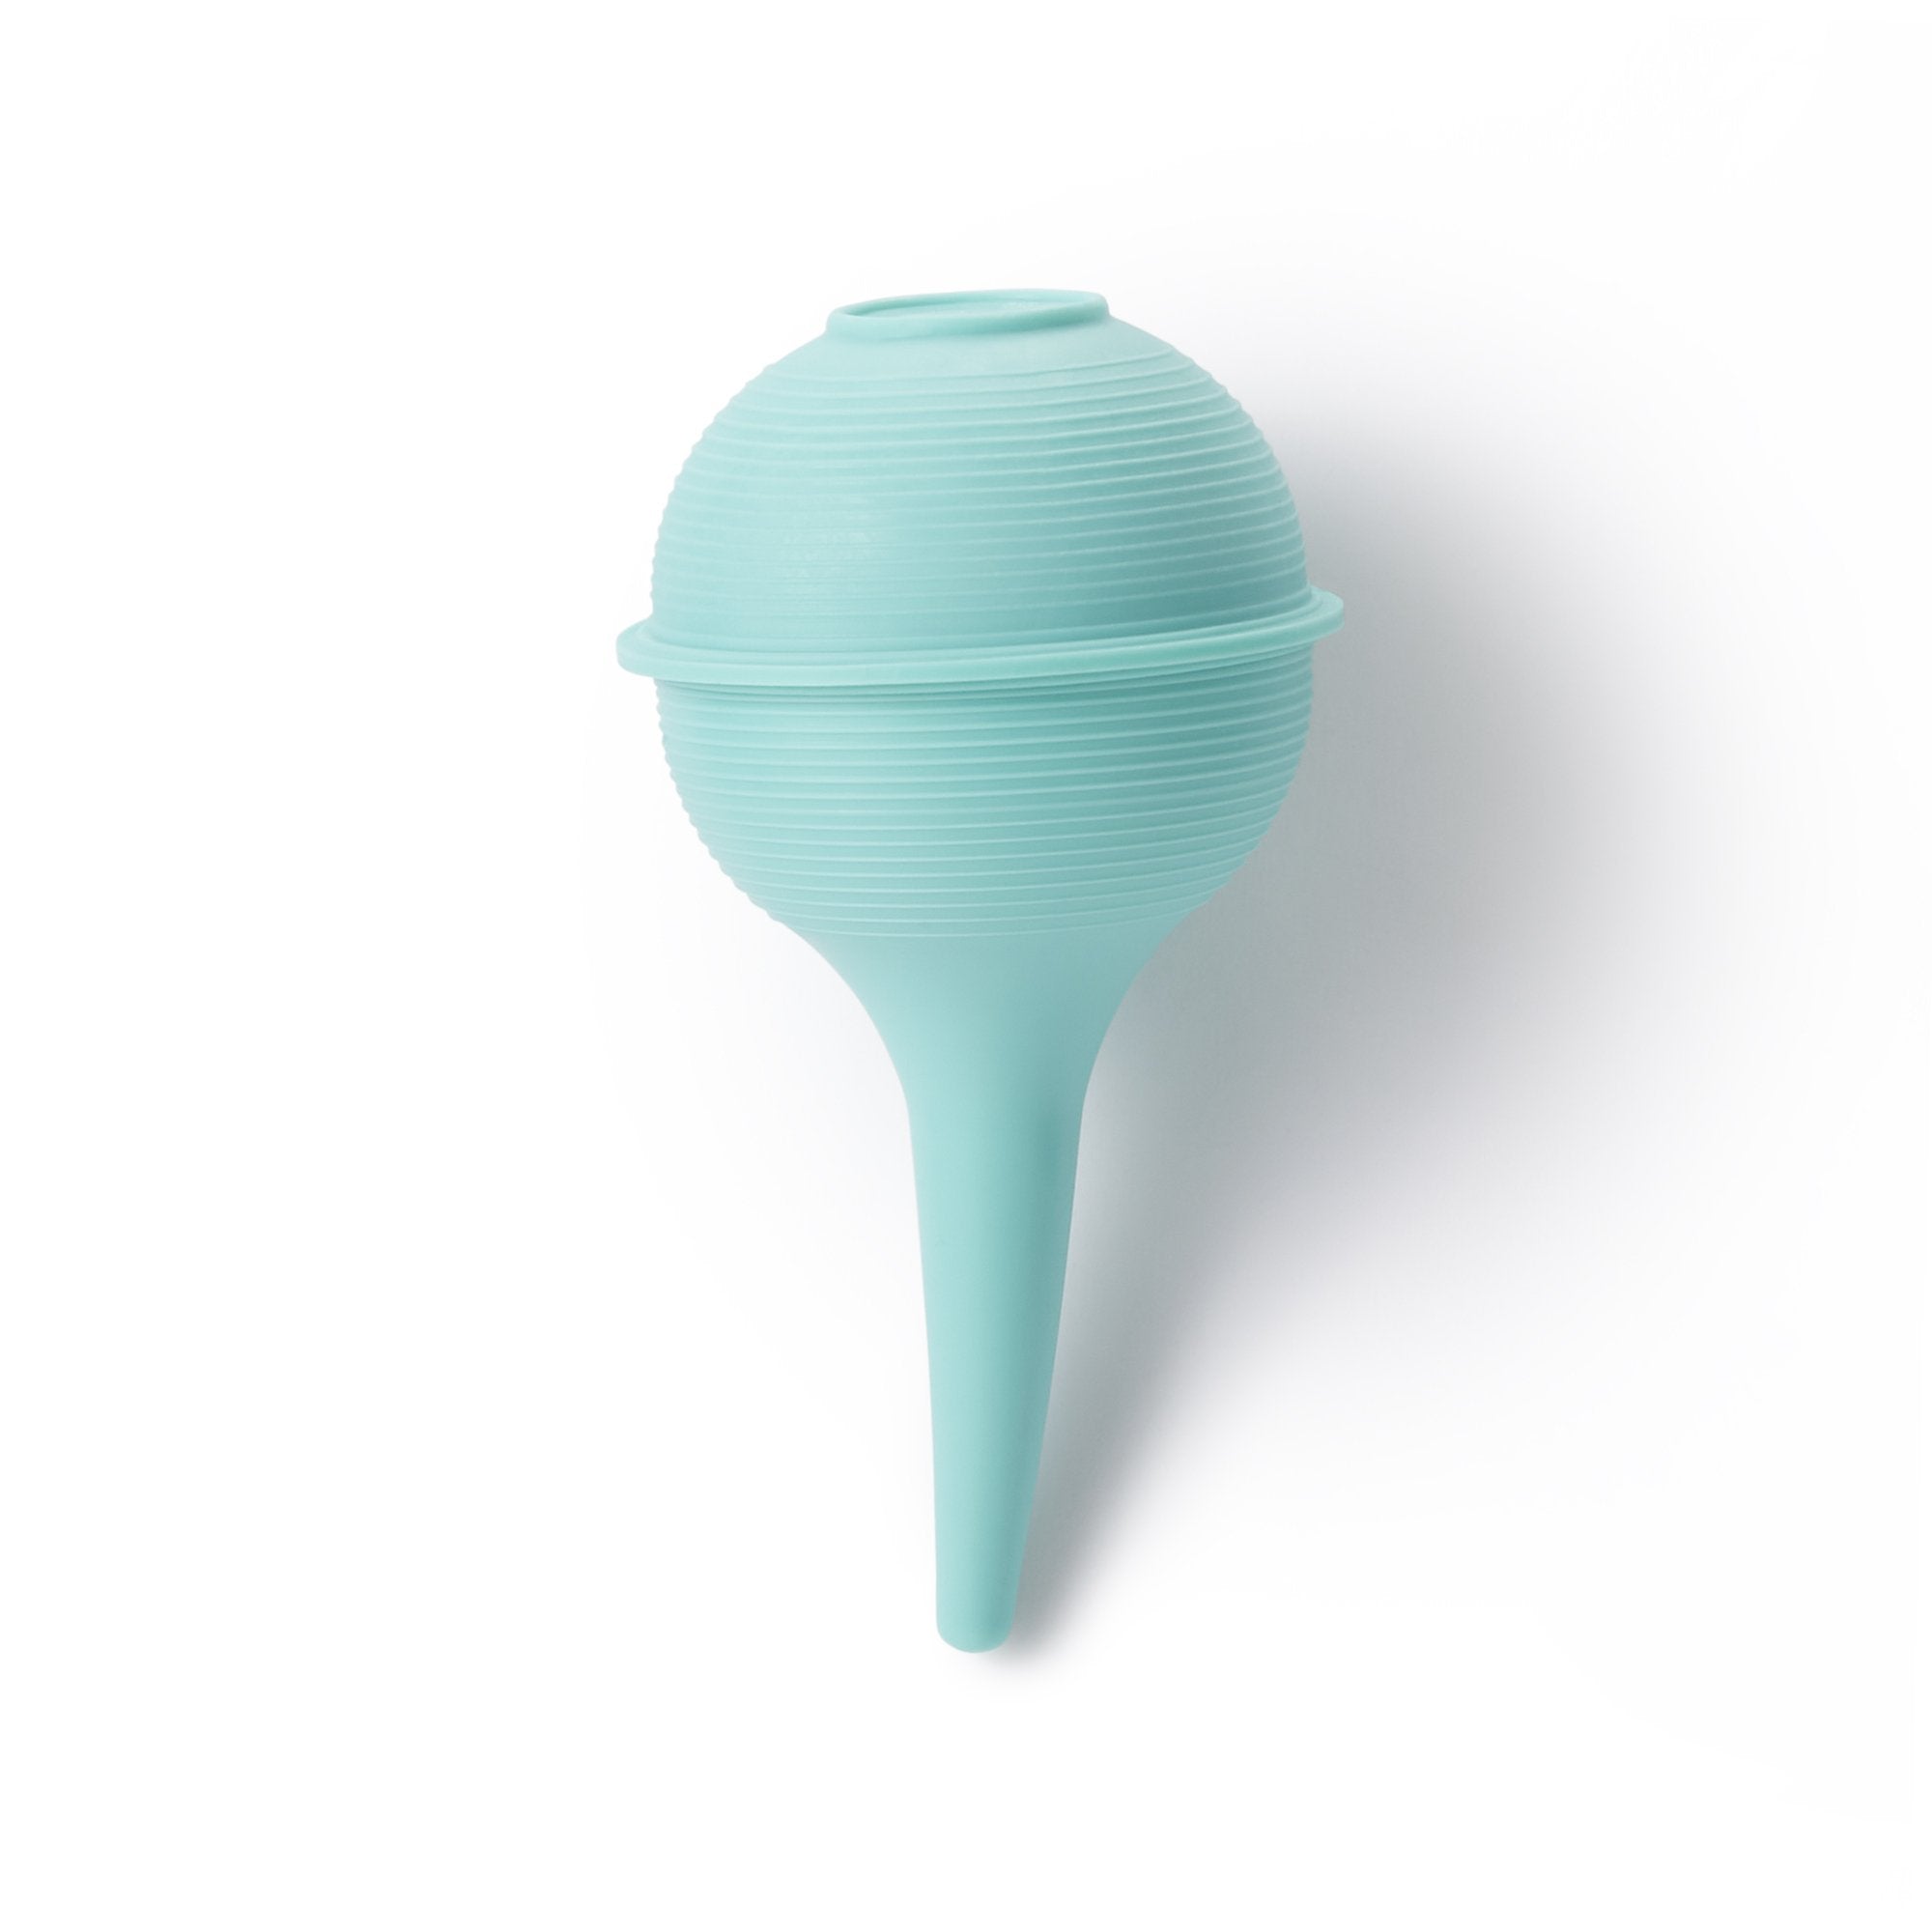 Ear / Ulcer Bulb Syringe PVC Pouch Sterile Disposable 3 oz.